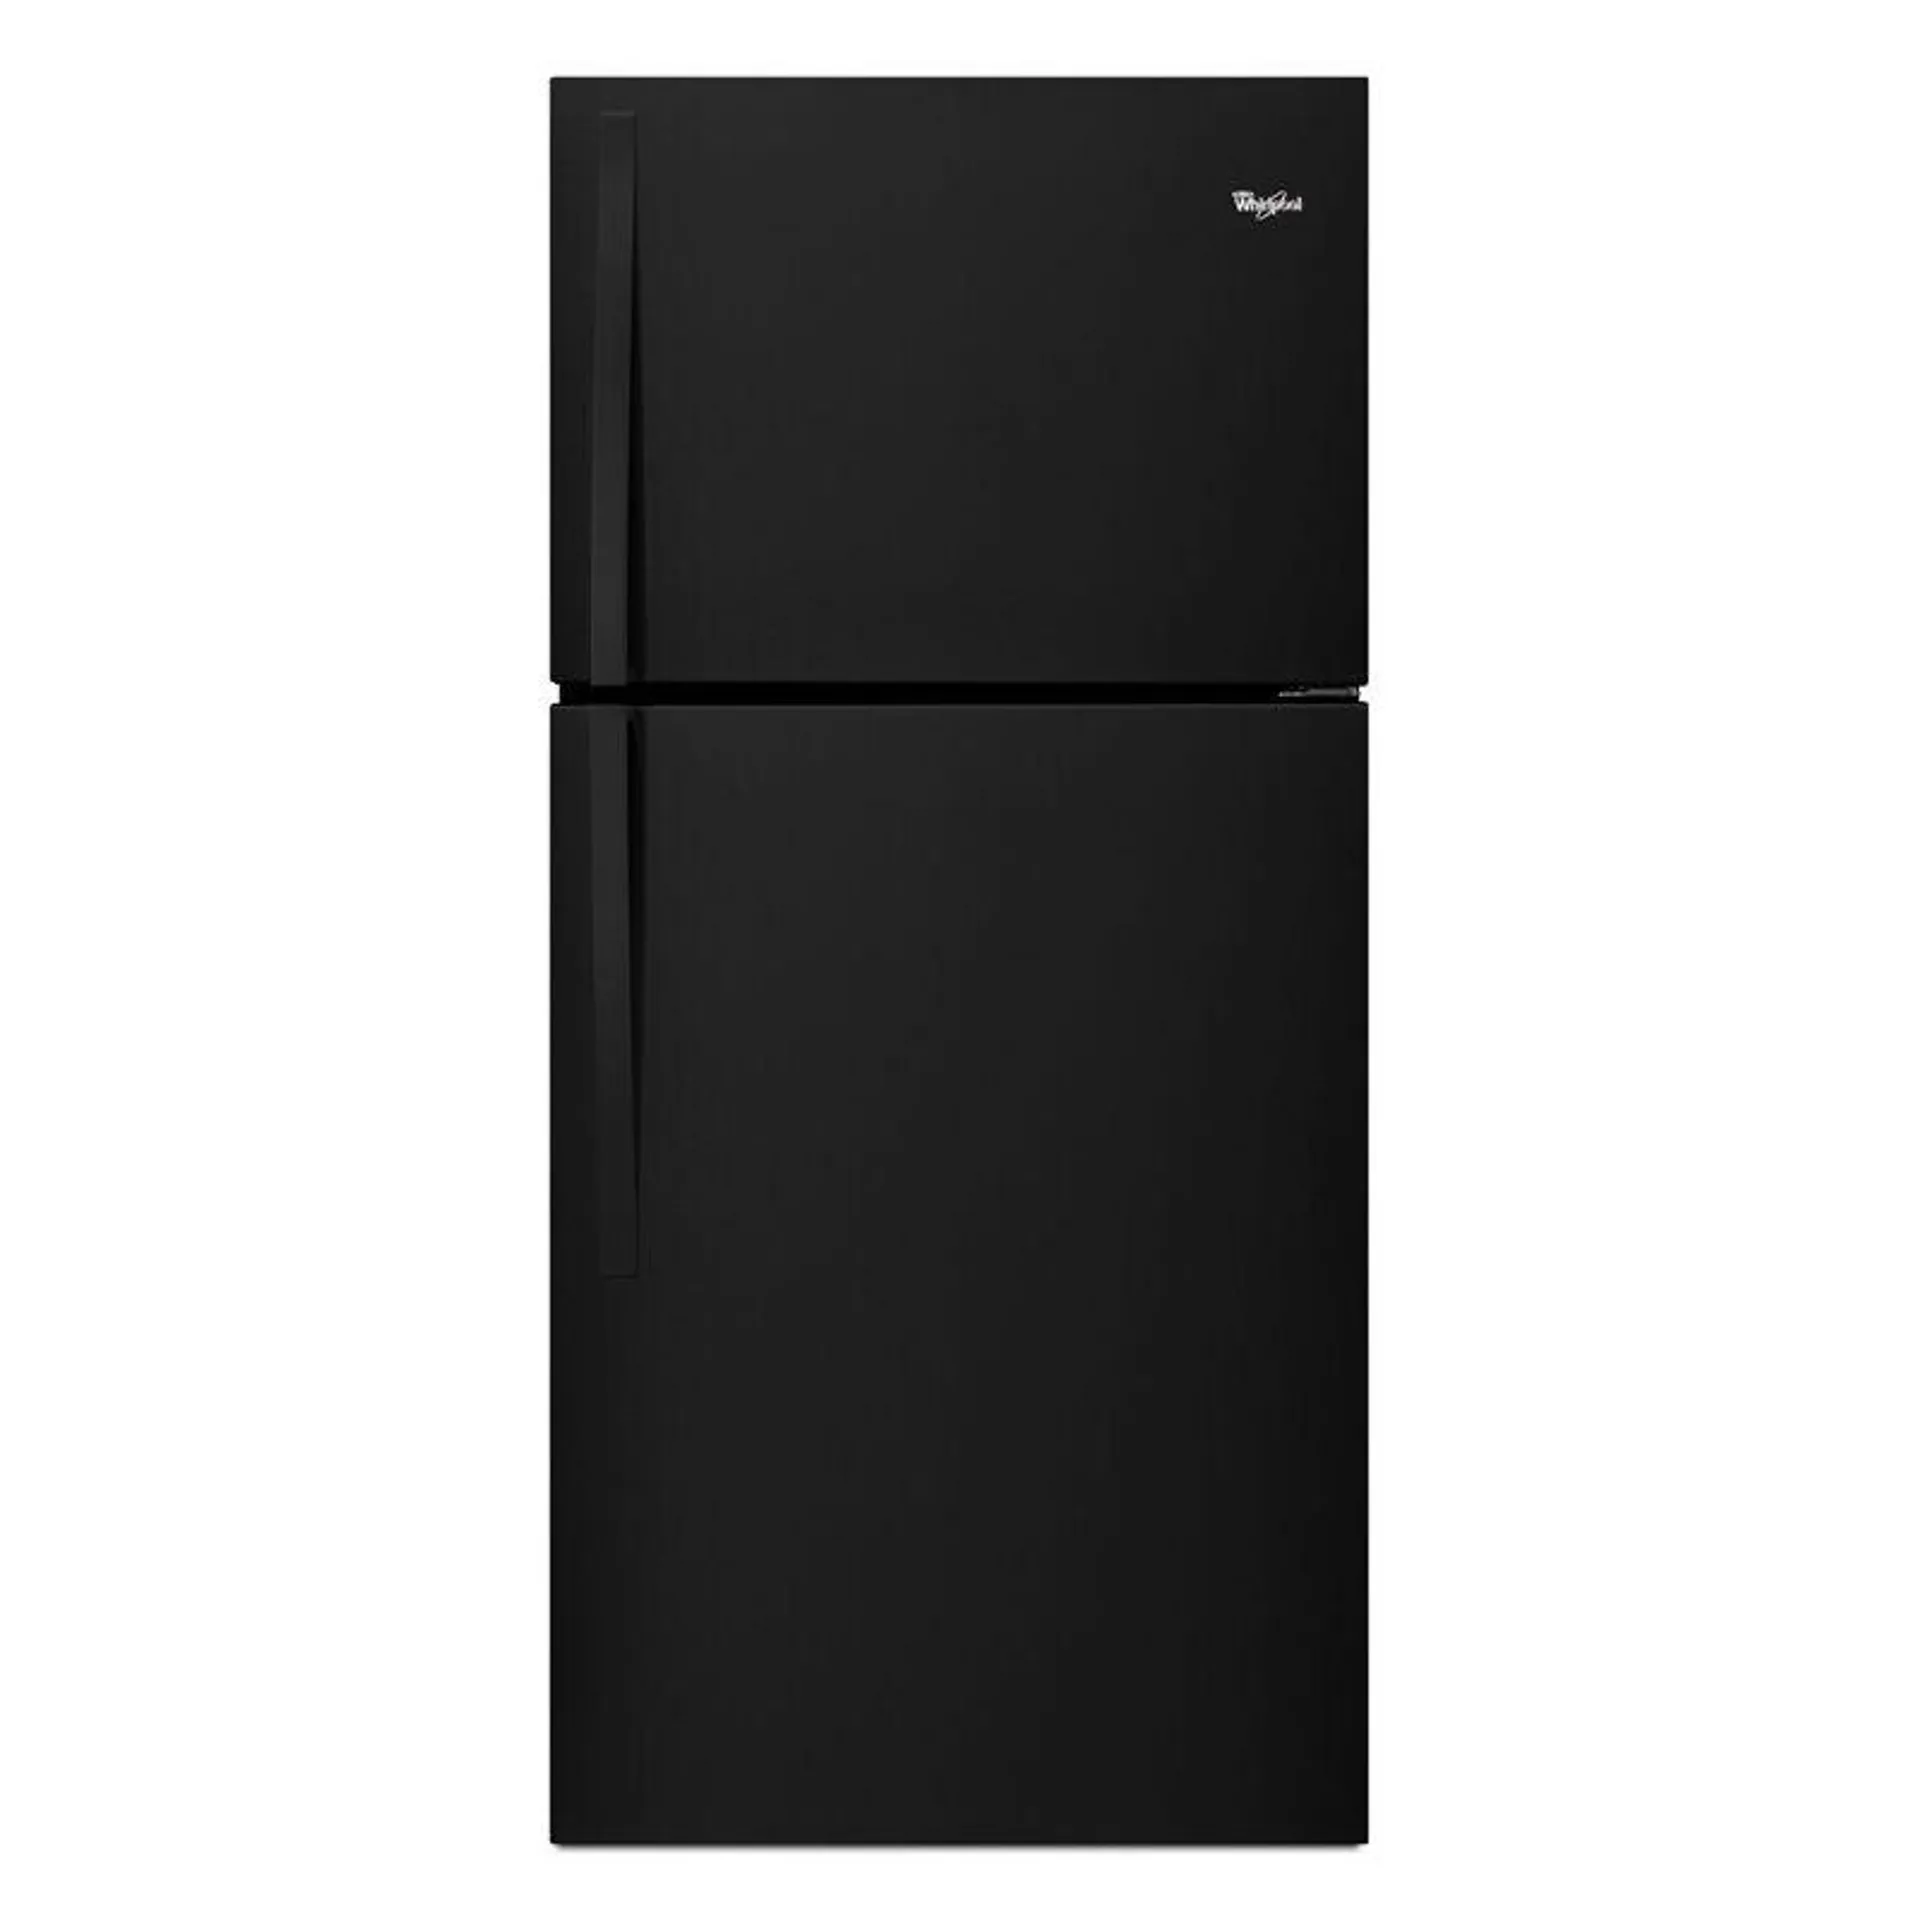 Whirlpool 30 in. 19.2 cu. ft. Top Freezer Refrigerator - Black